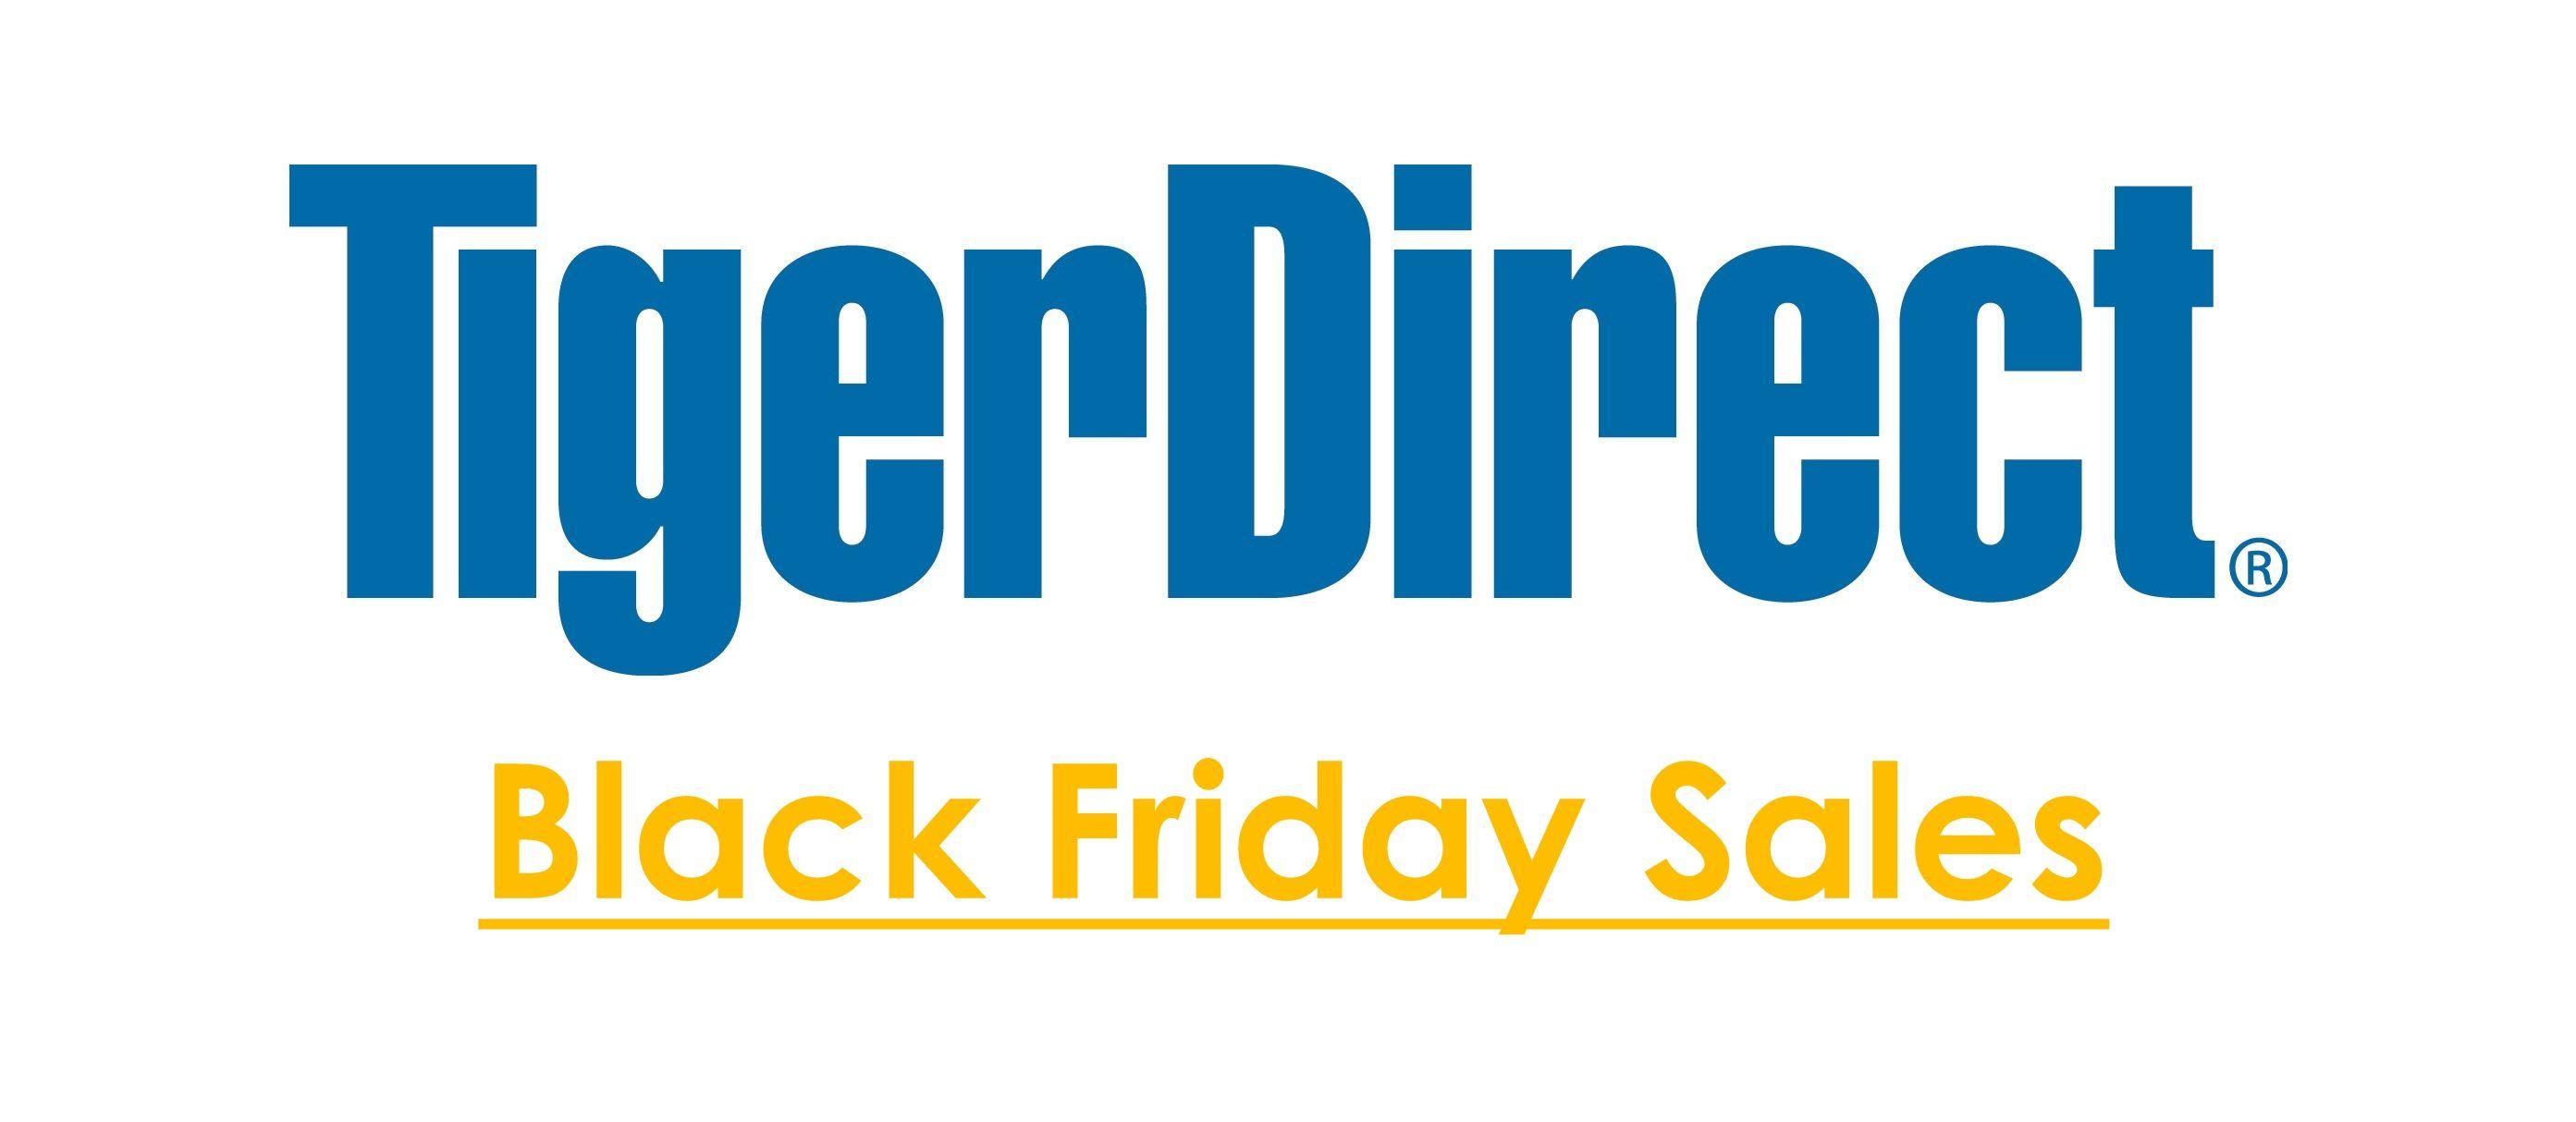 TigerDirect Logo - TigerDirect Black Friday 2018 Deals, Discounts, and Sales - Black ...